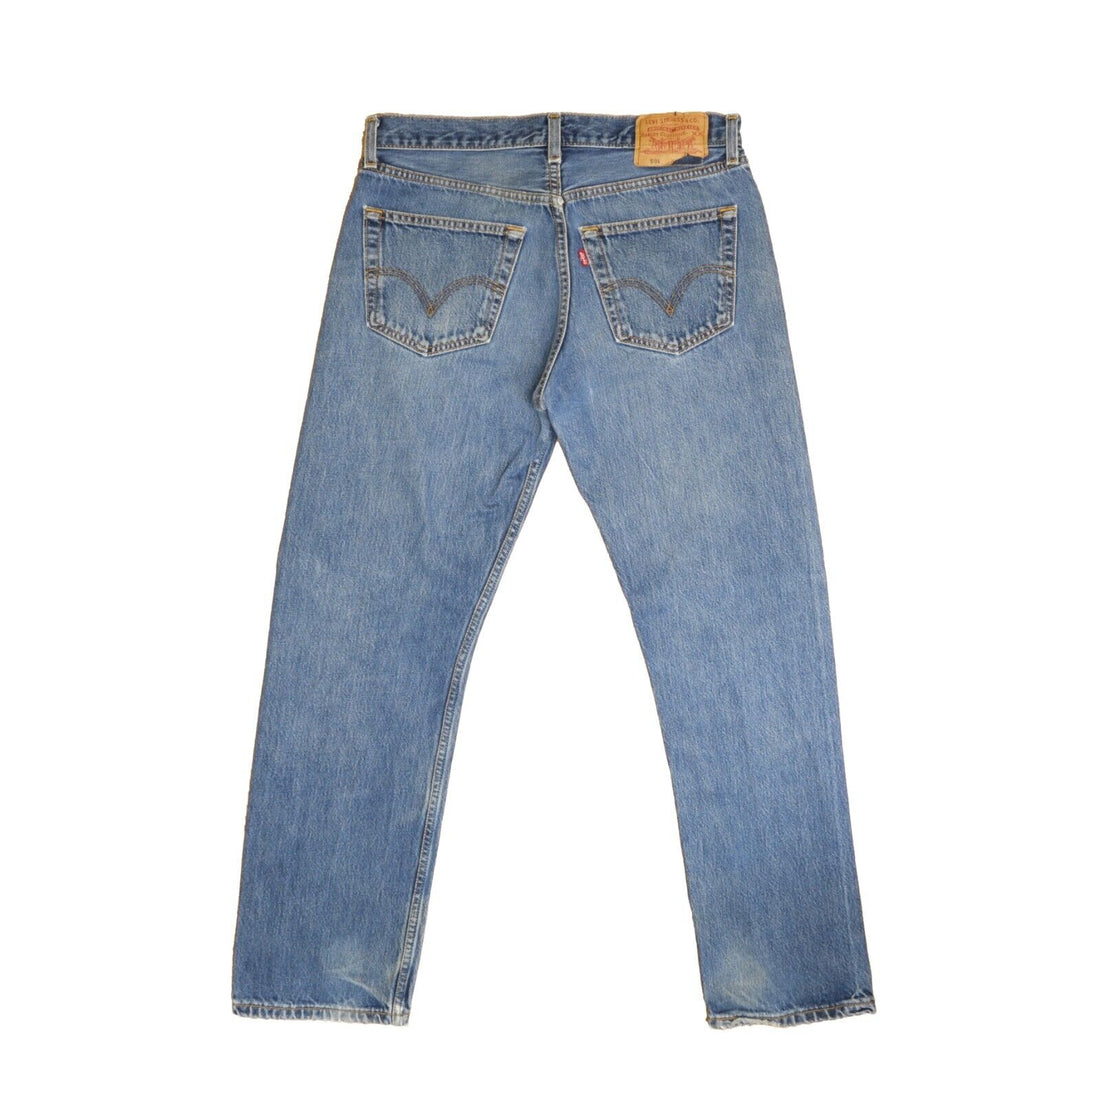 Vintage Levi Strauss & Co 501 Denim Jeans Size 32 X 30 501 0105